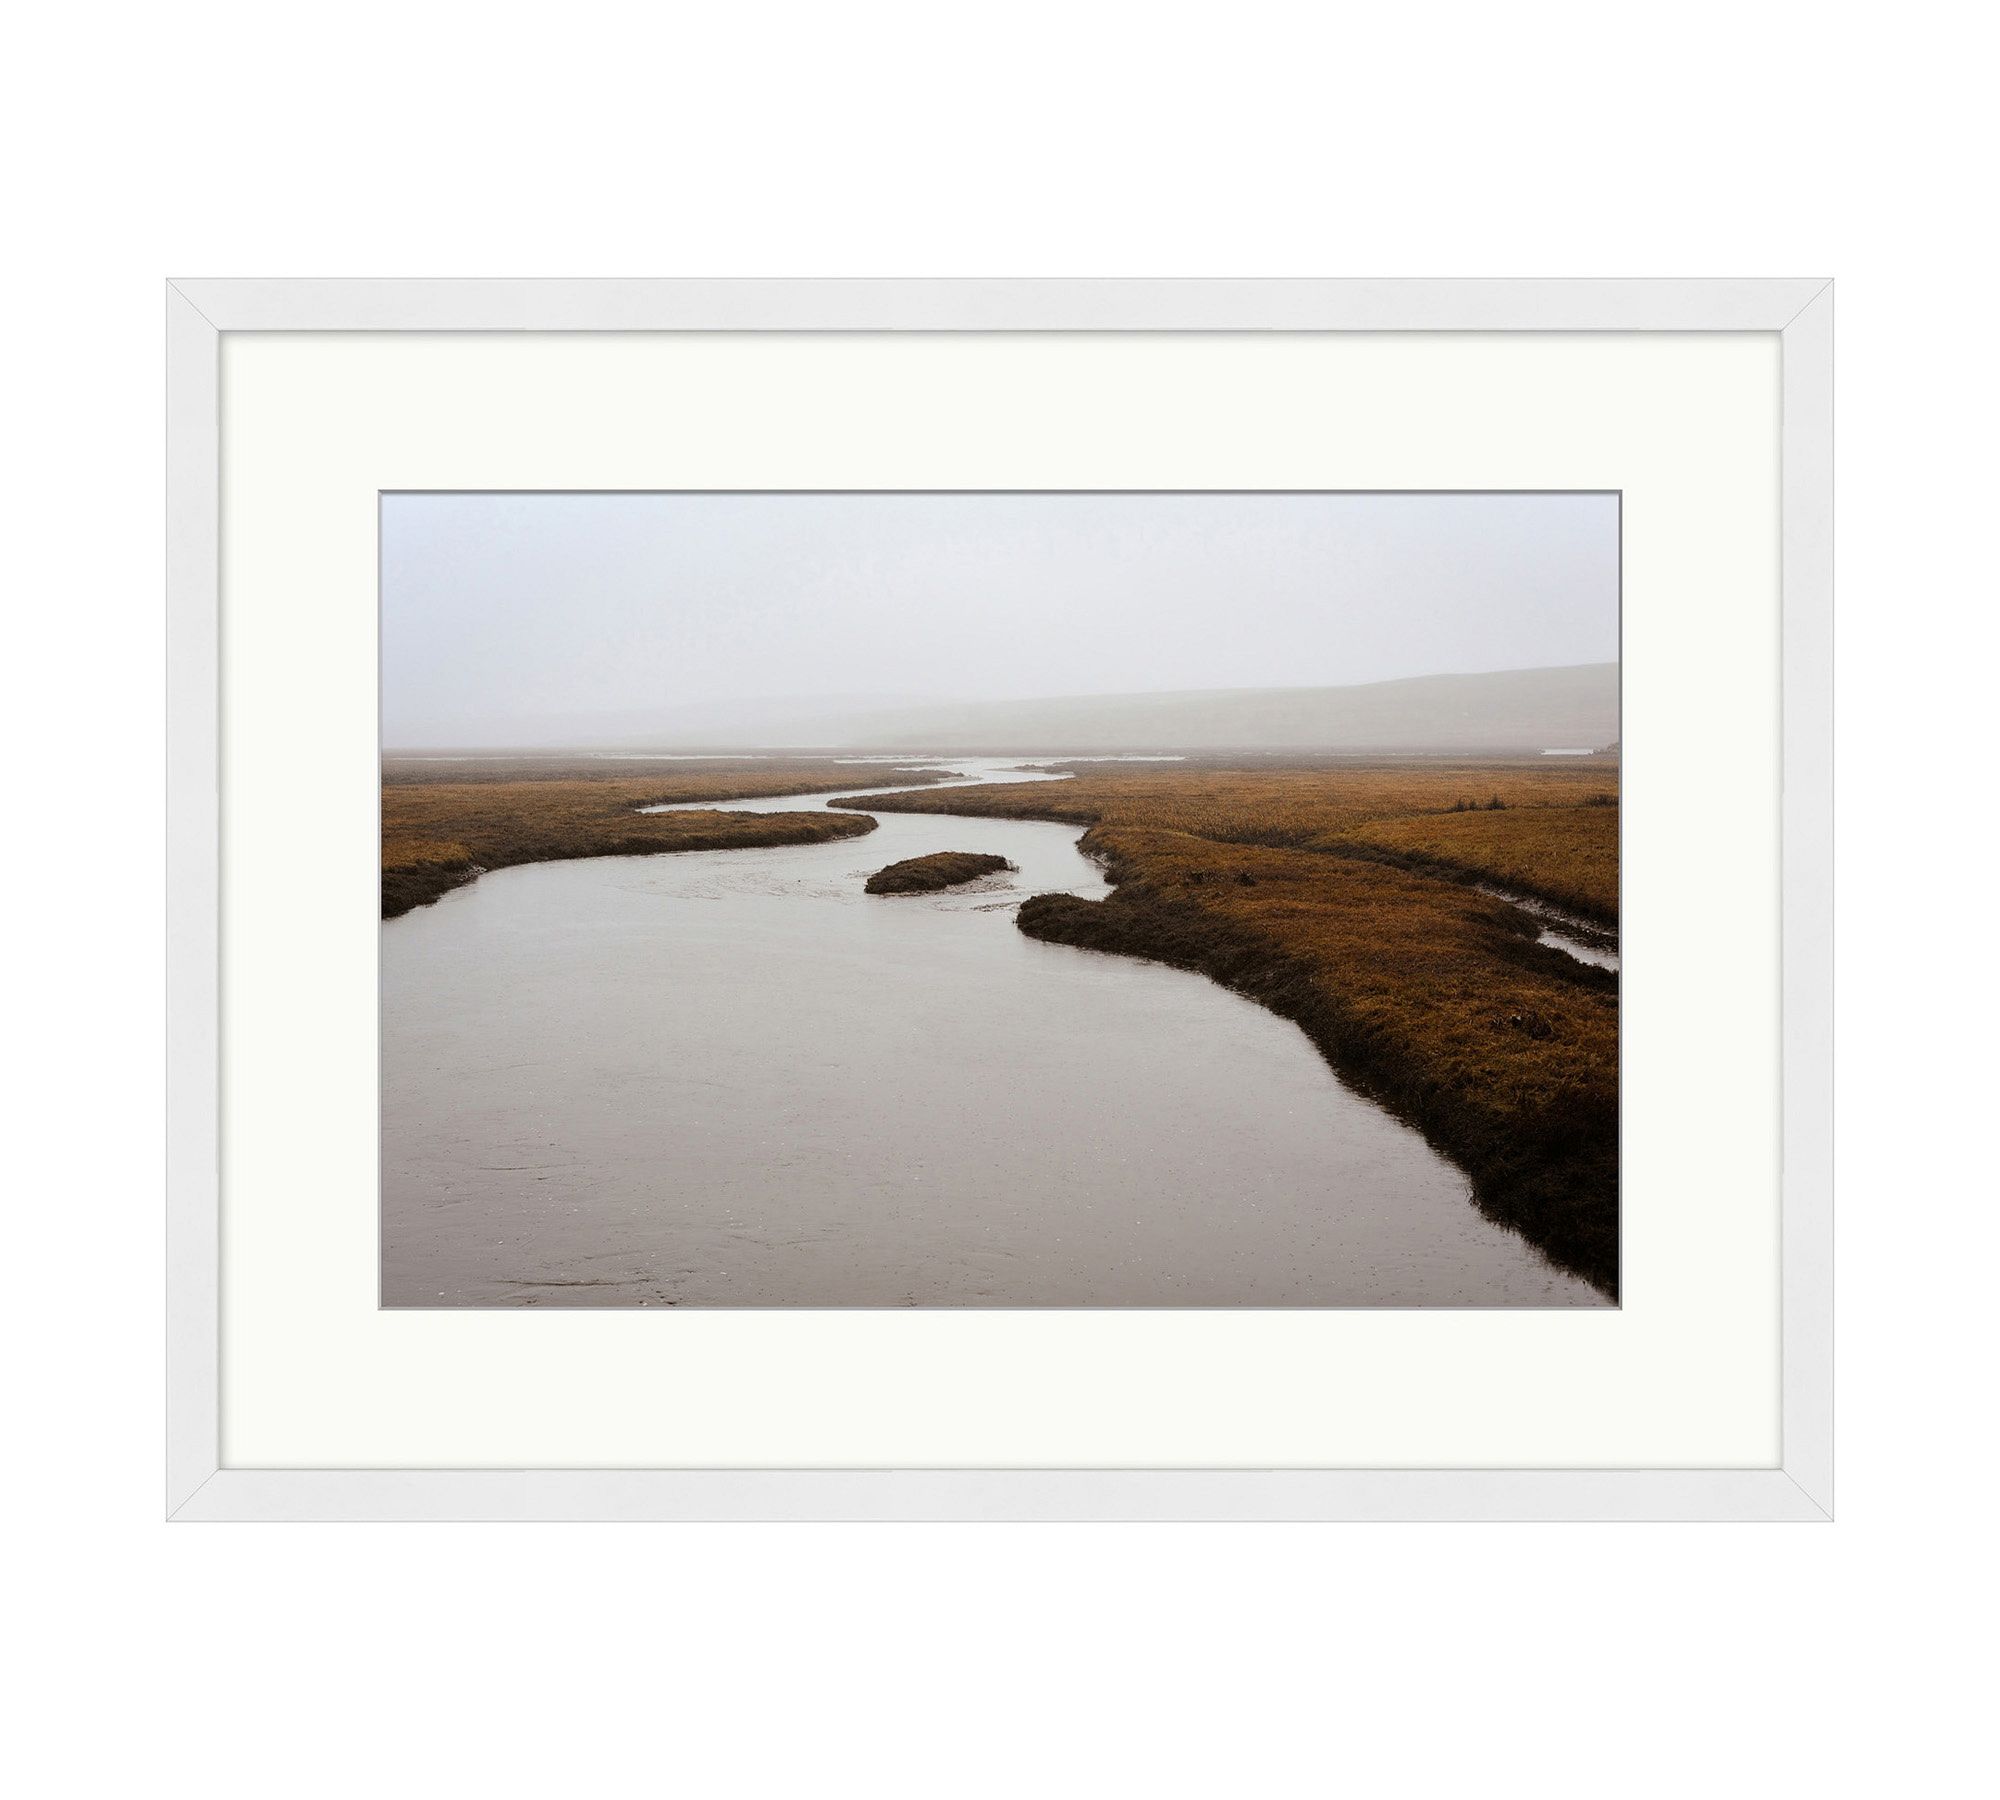 Estuary the Mist by Meg Haywood Sullivan